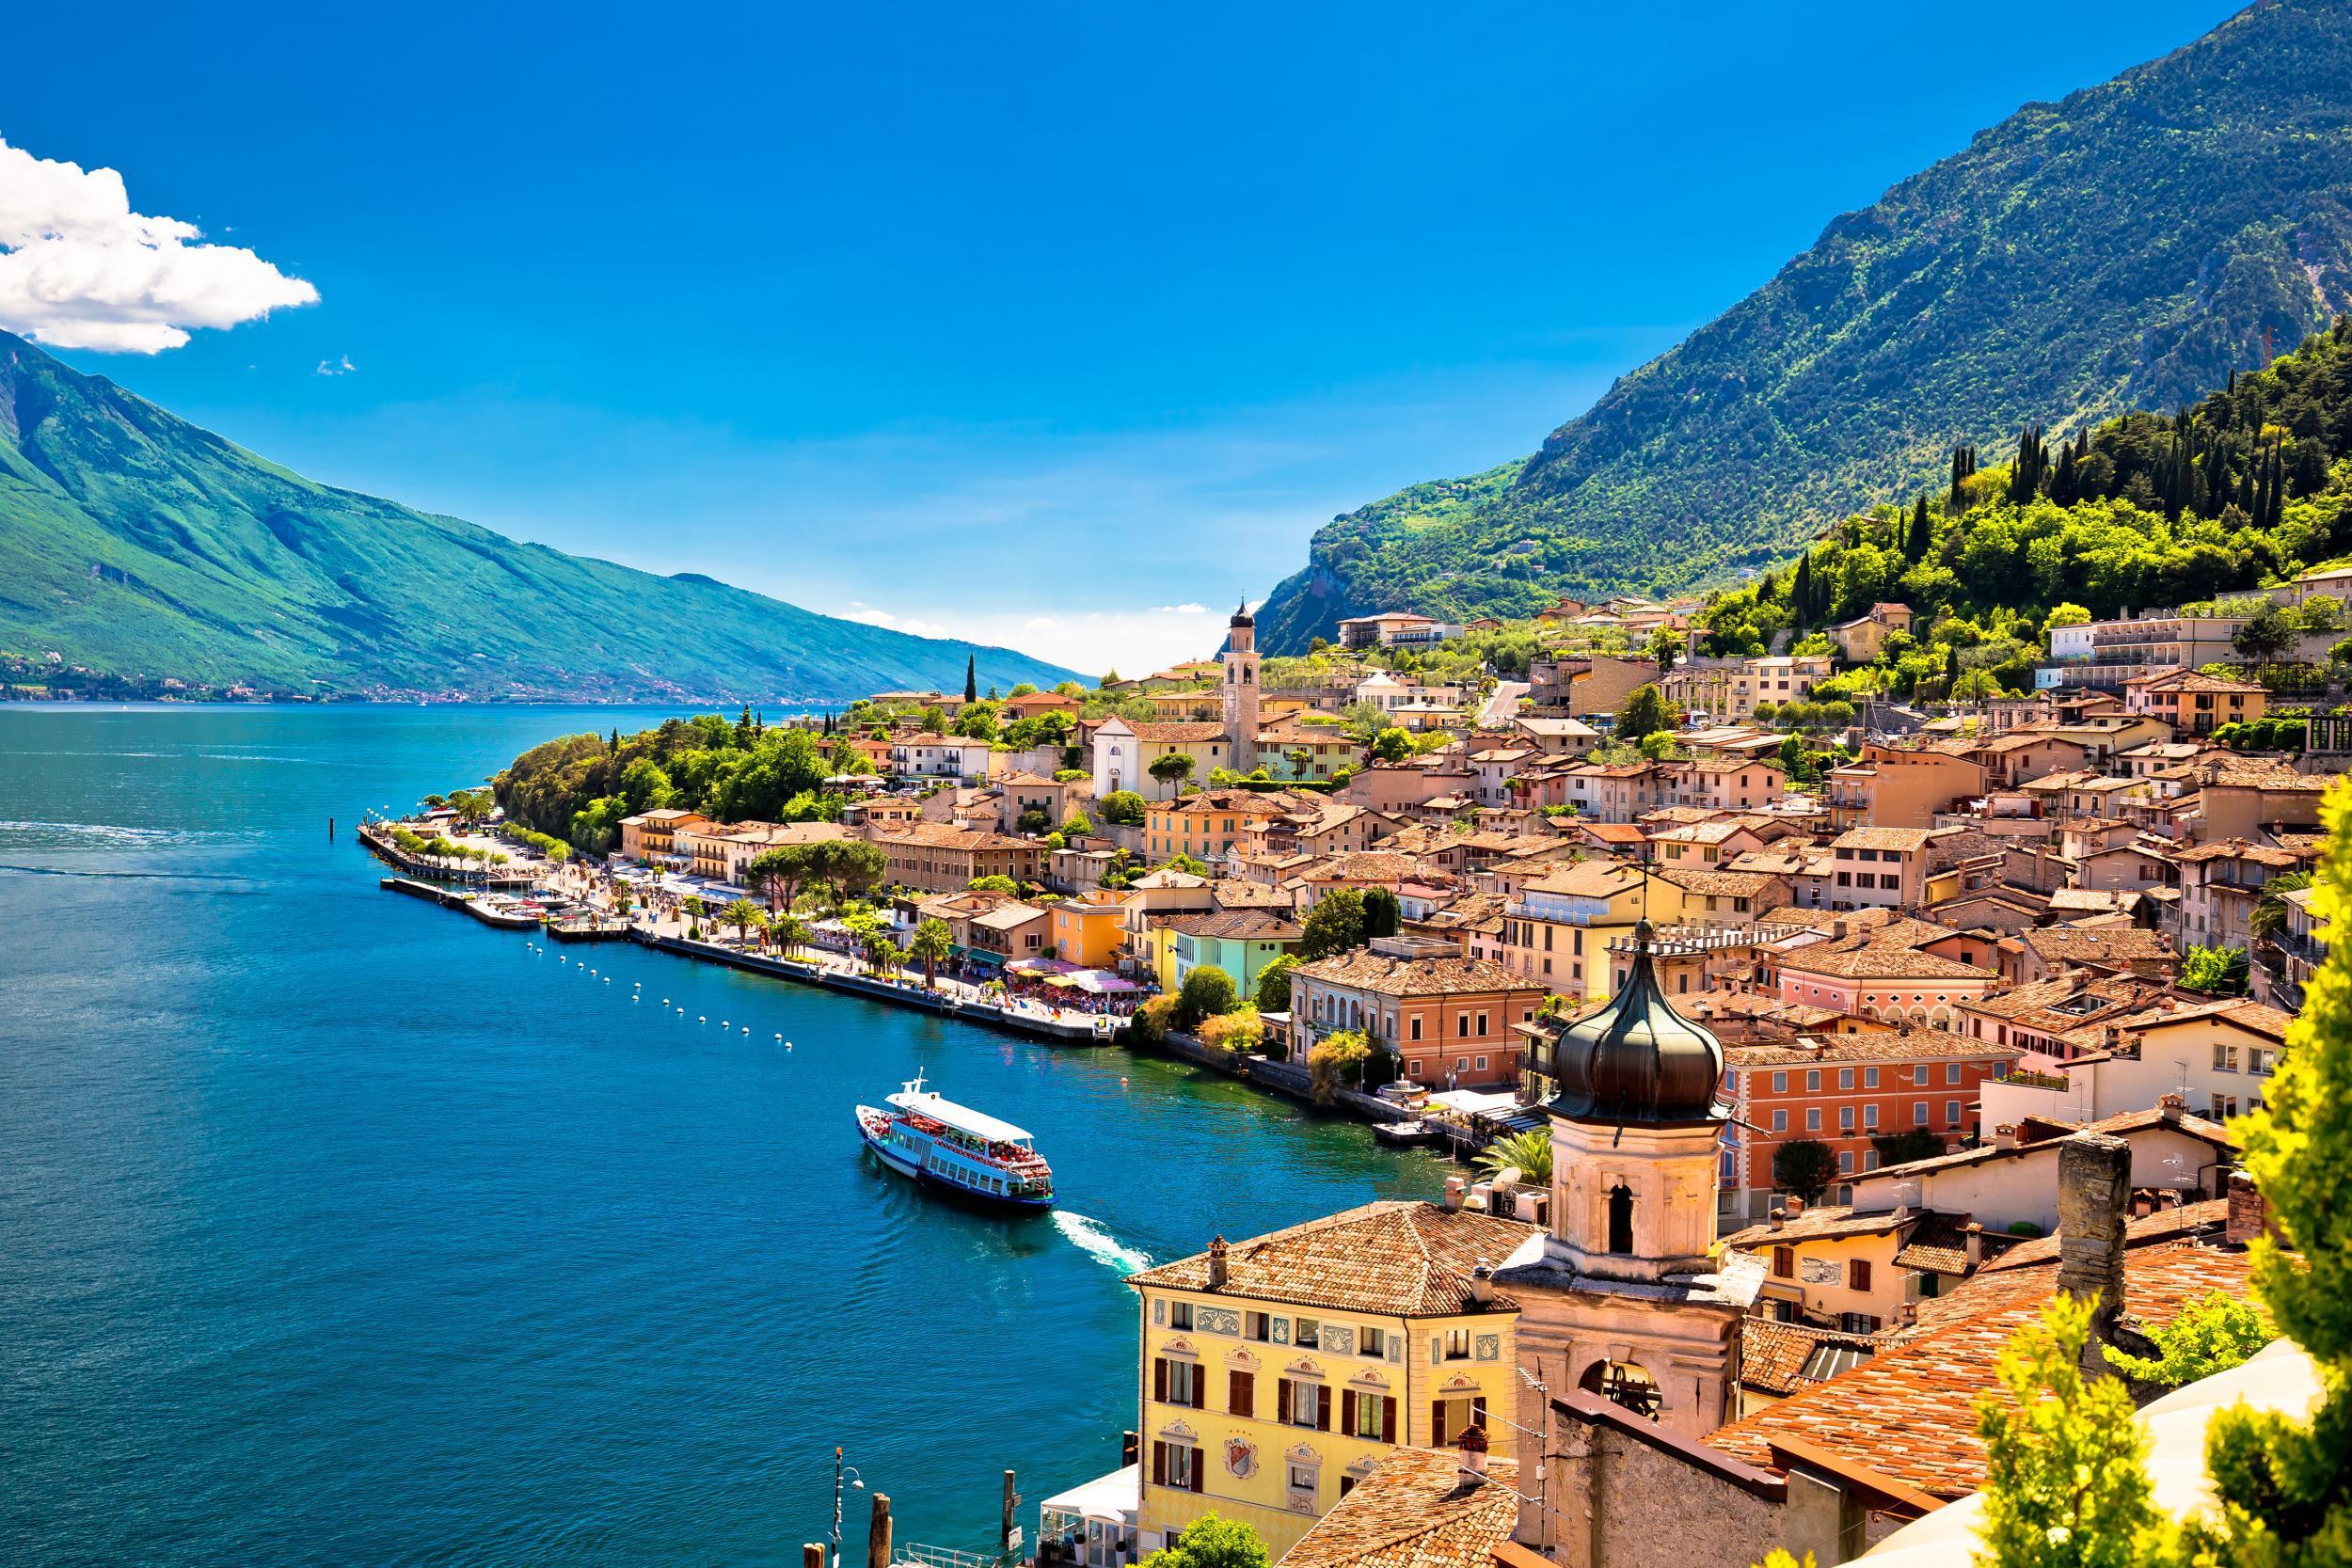 Lake Garda is a popular tourist location